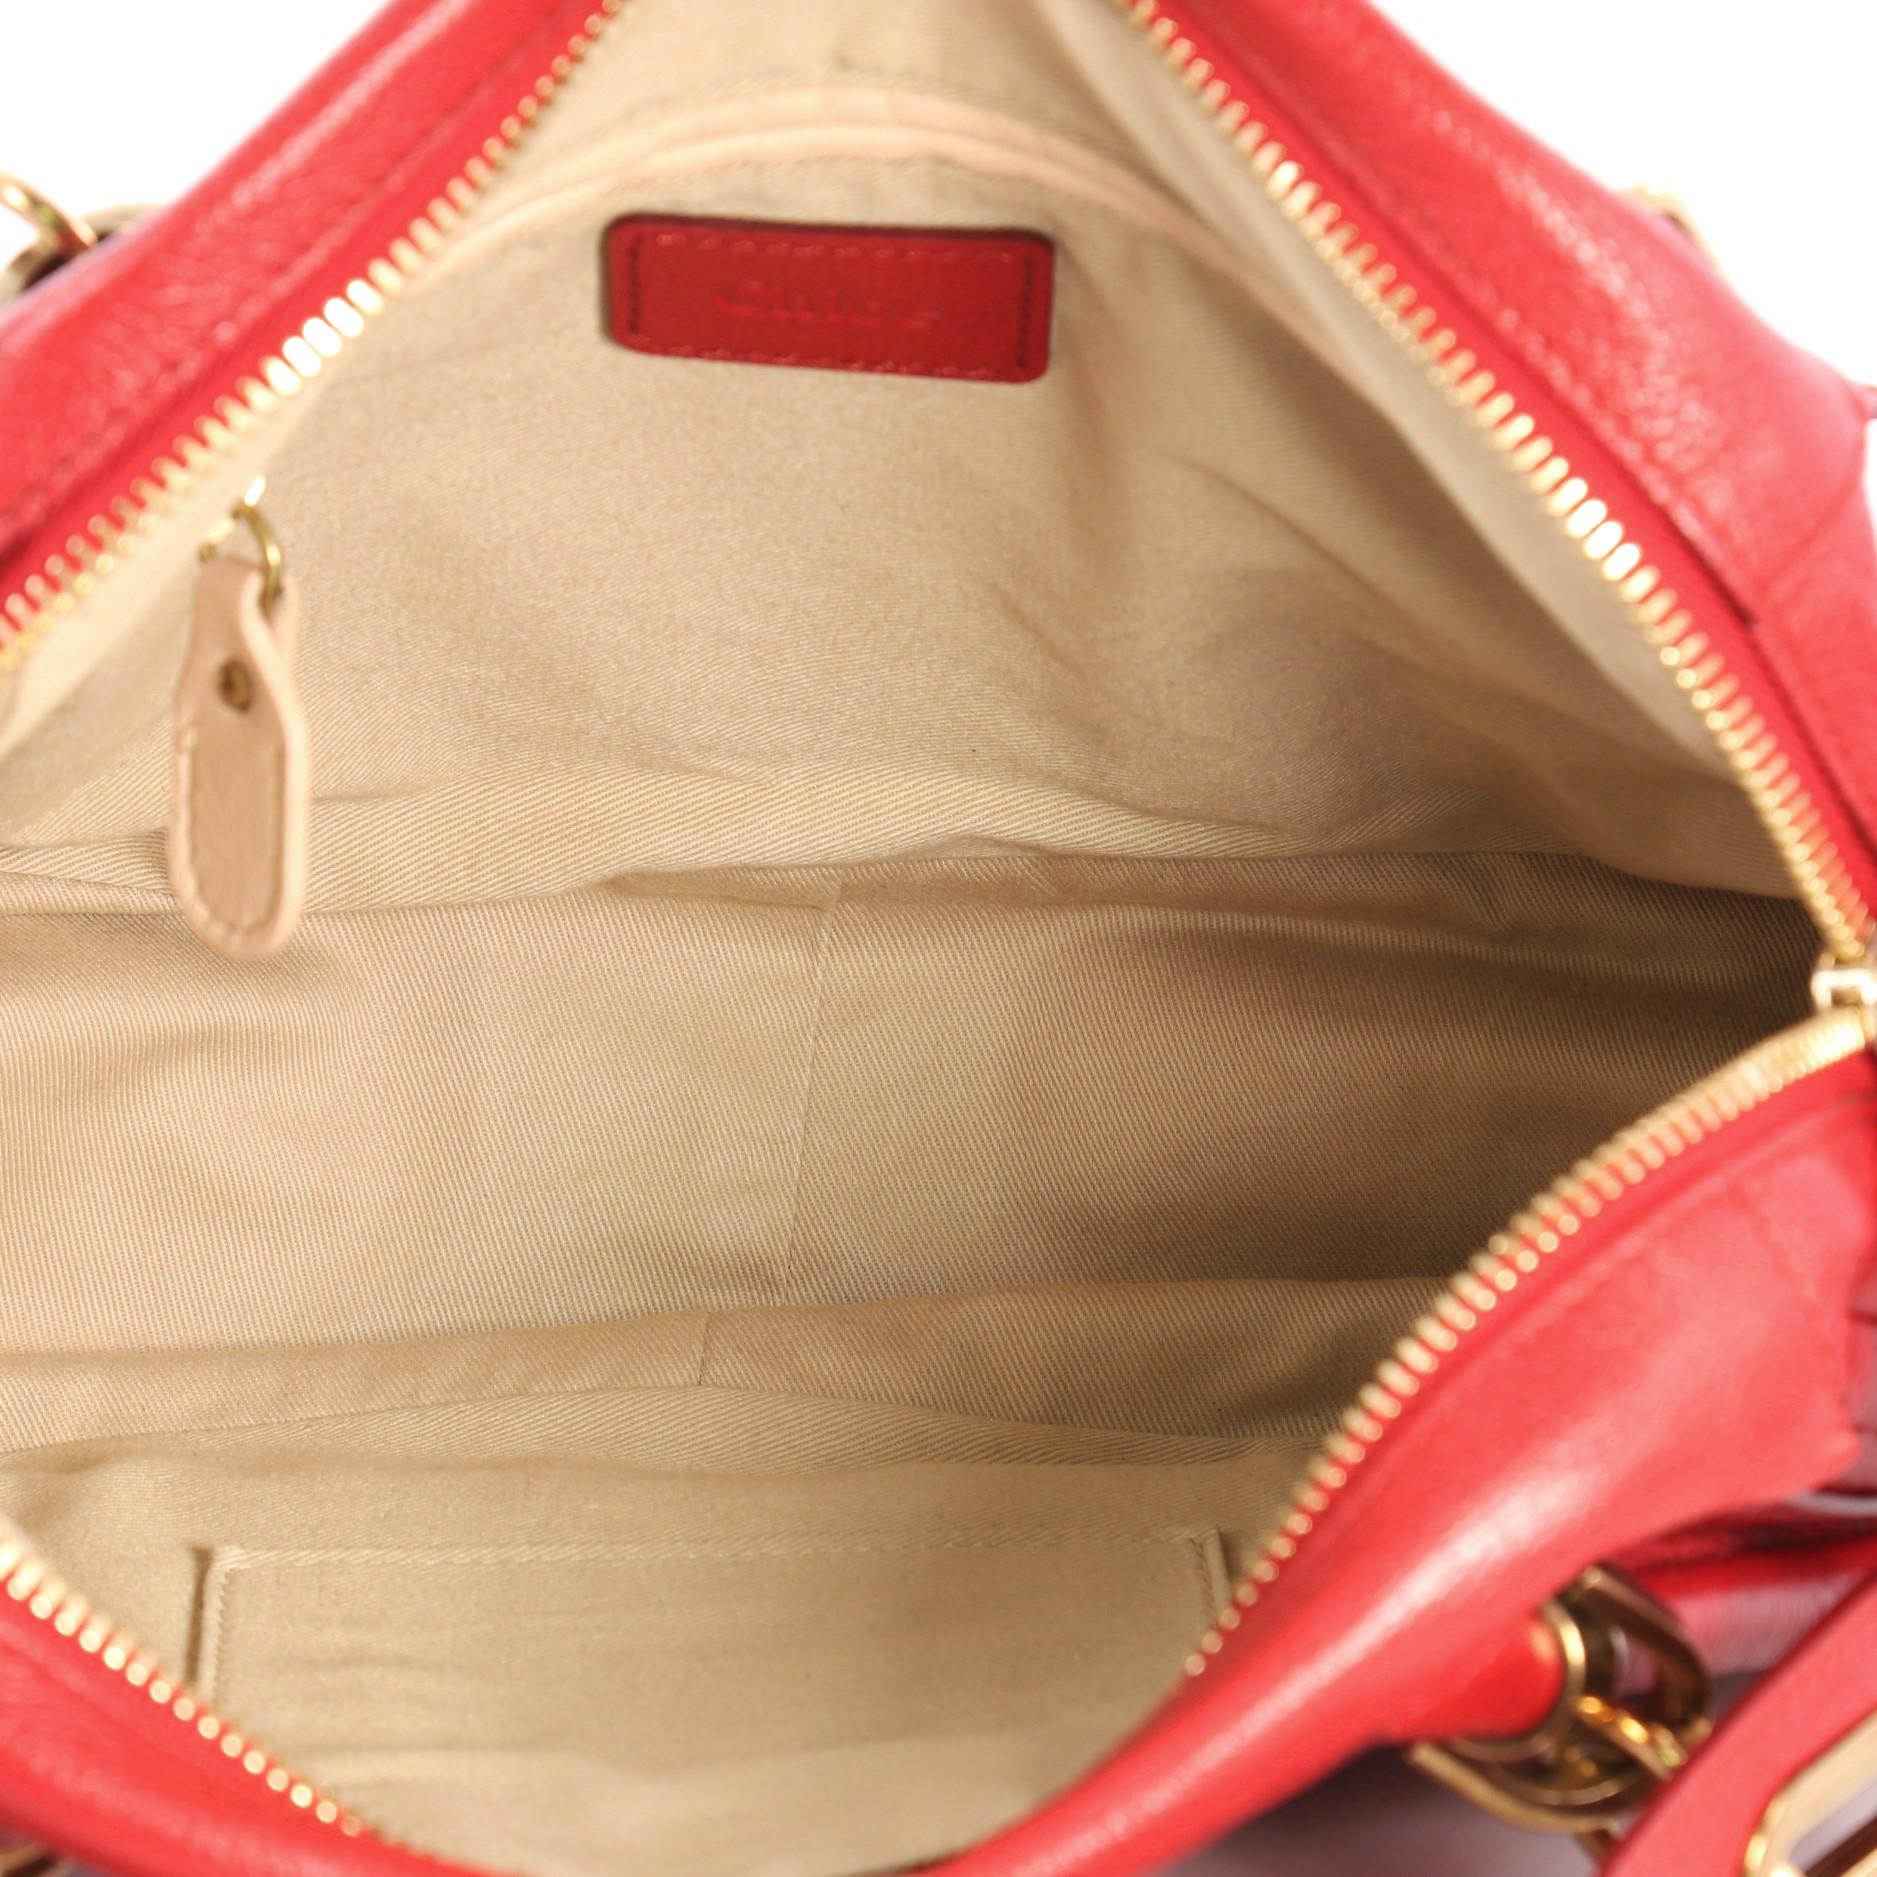 Chloe Paraty Top Handle Bag Leather Medium  1